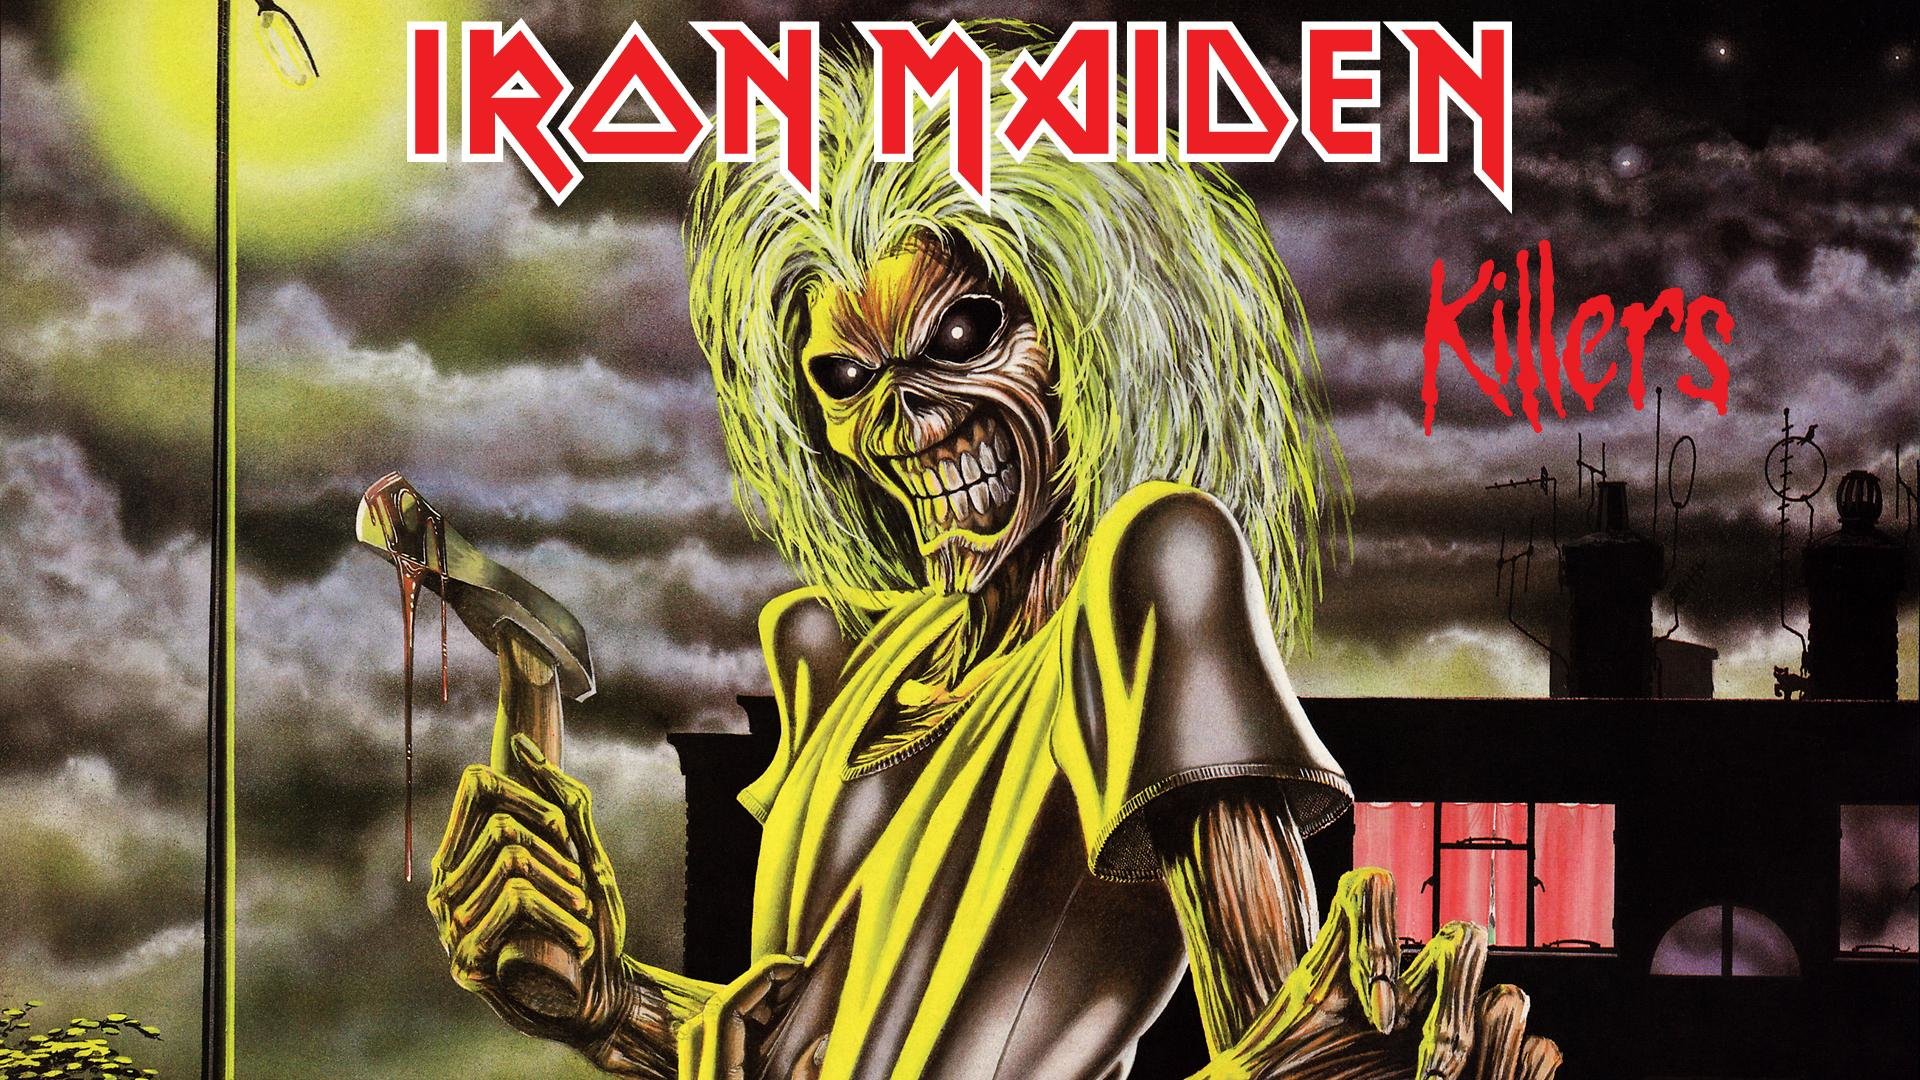 Free download Iron Maiden wallpaper ID:72456 1080p for desktop